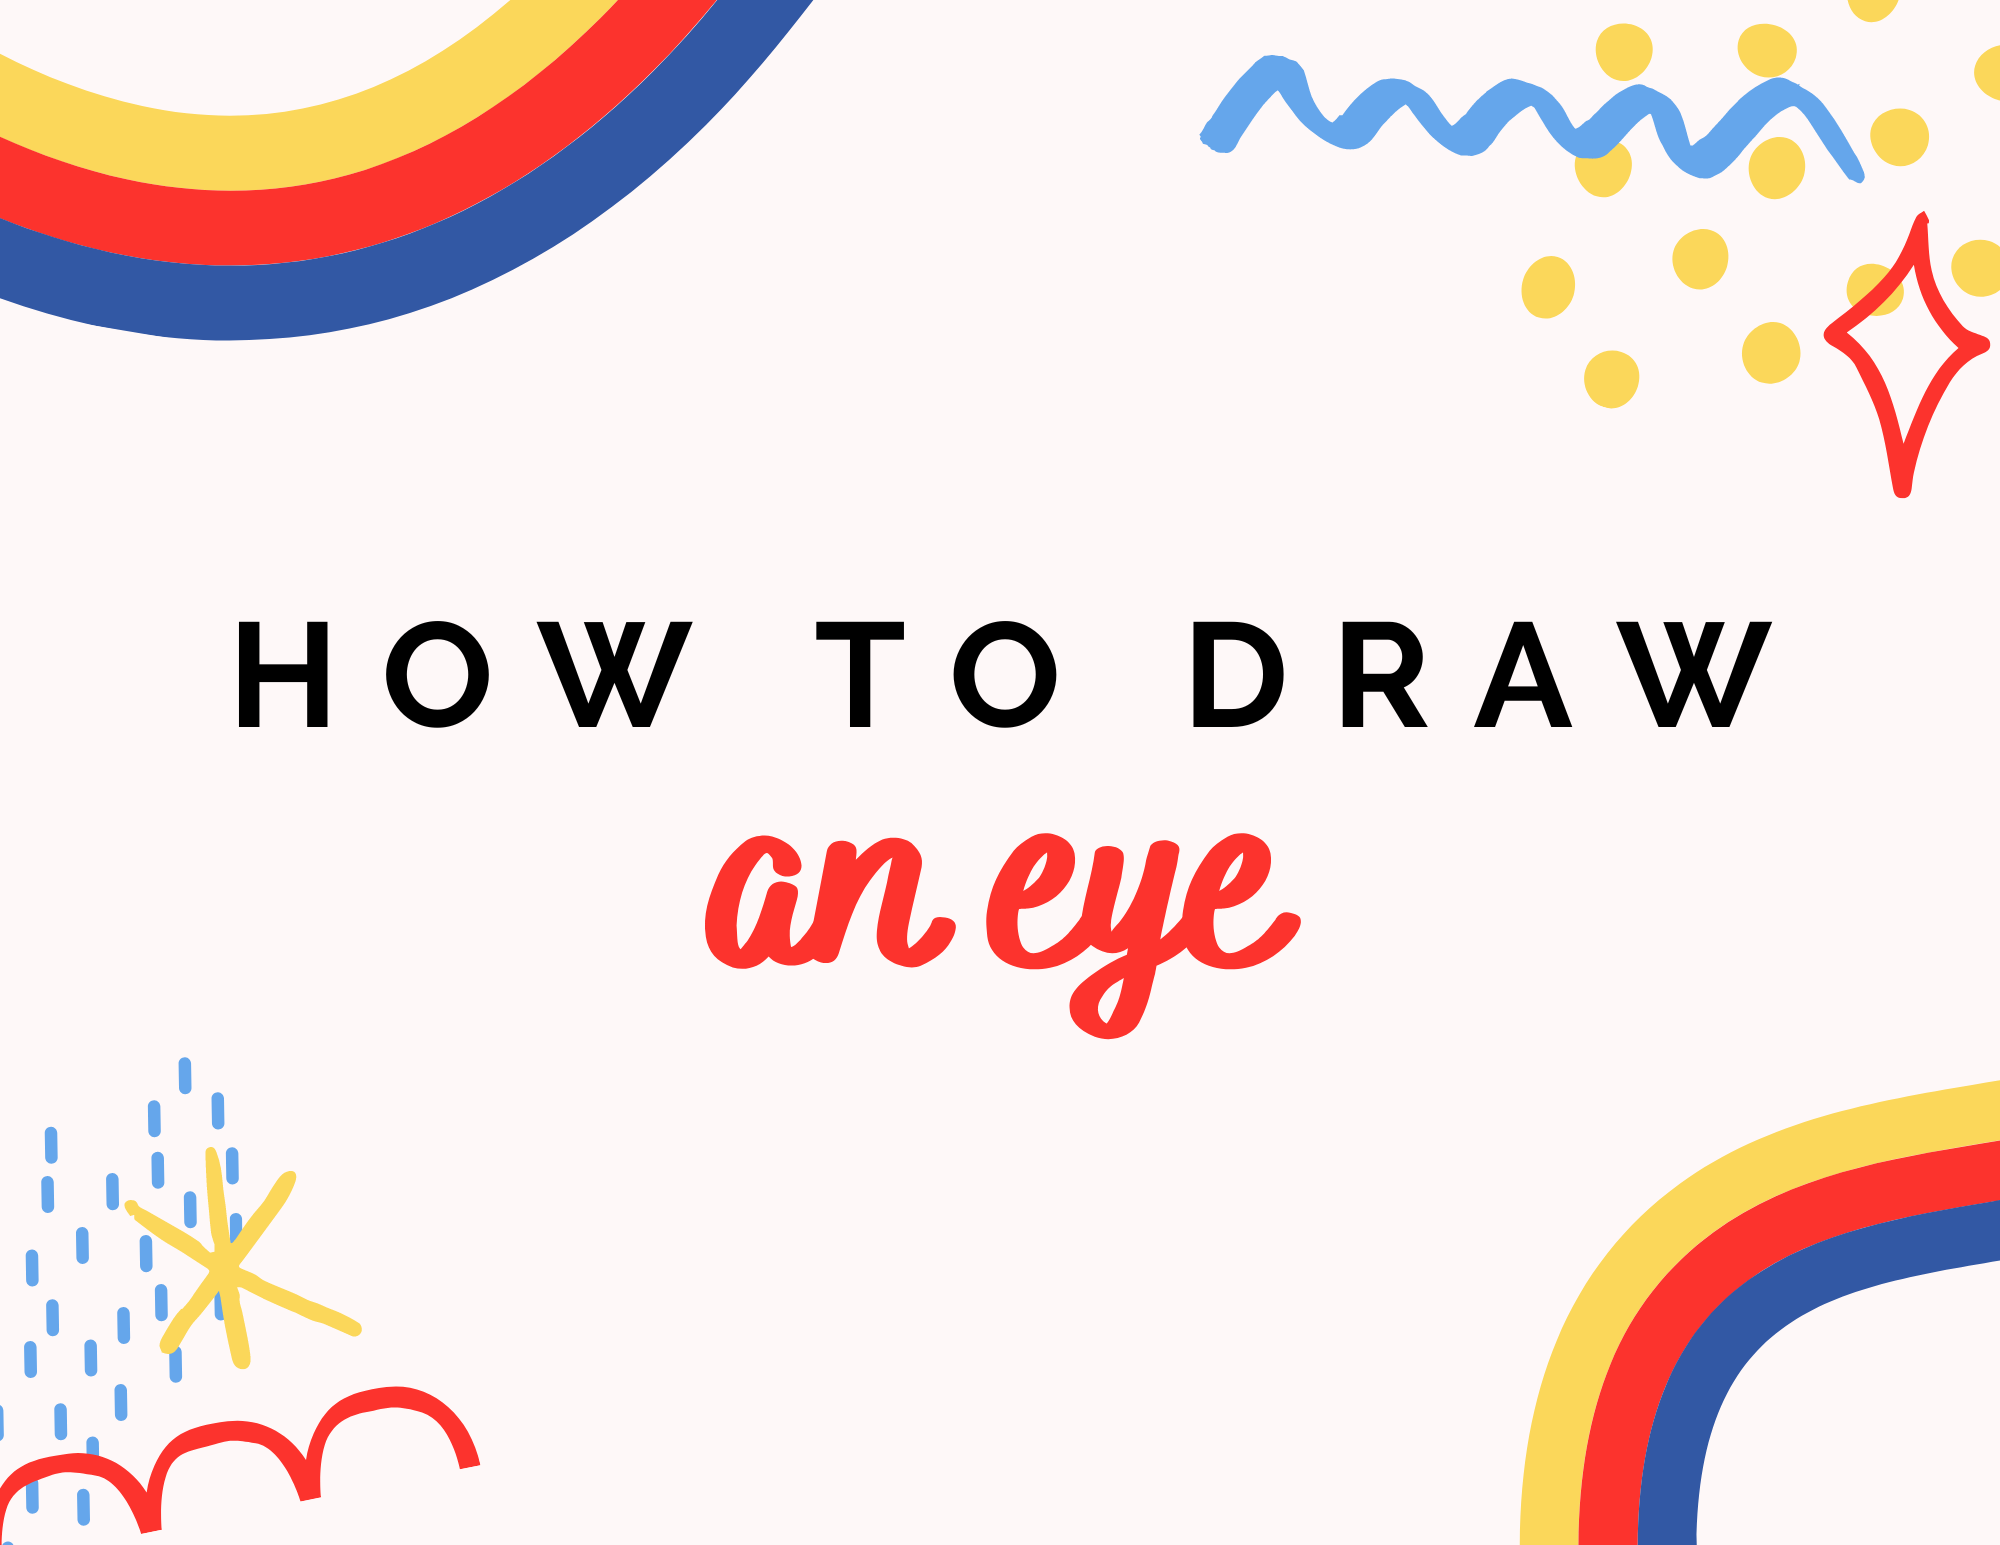 Hwo to Draw an Eye